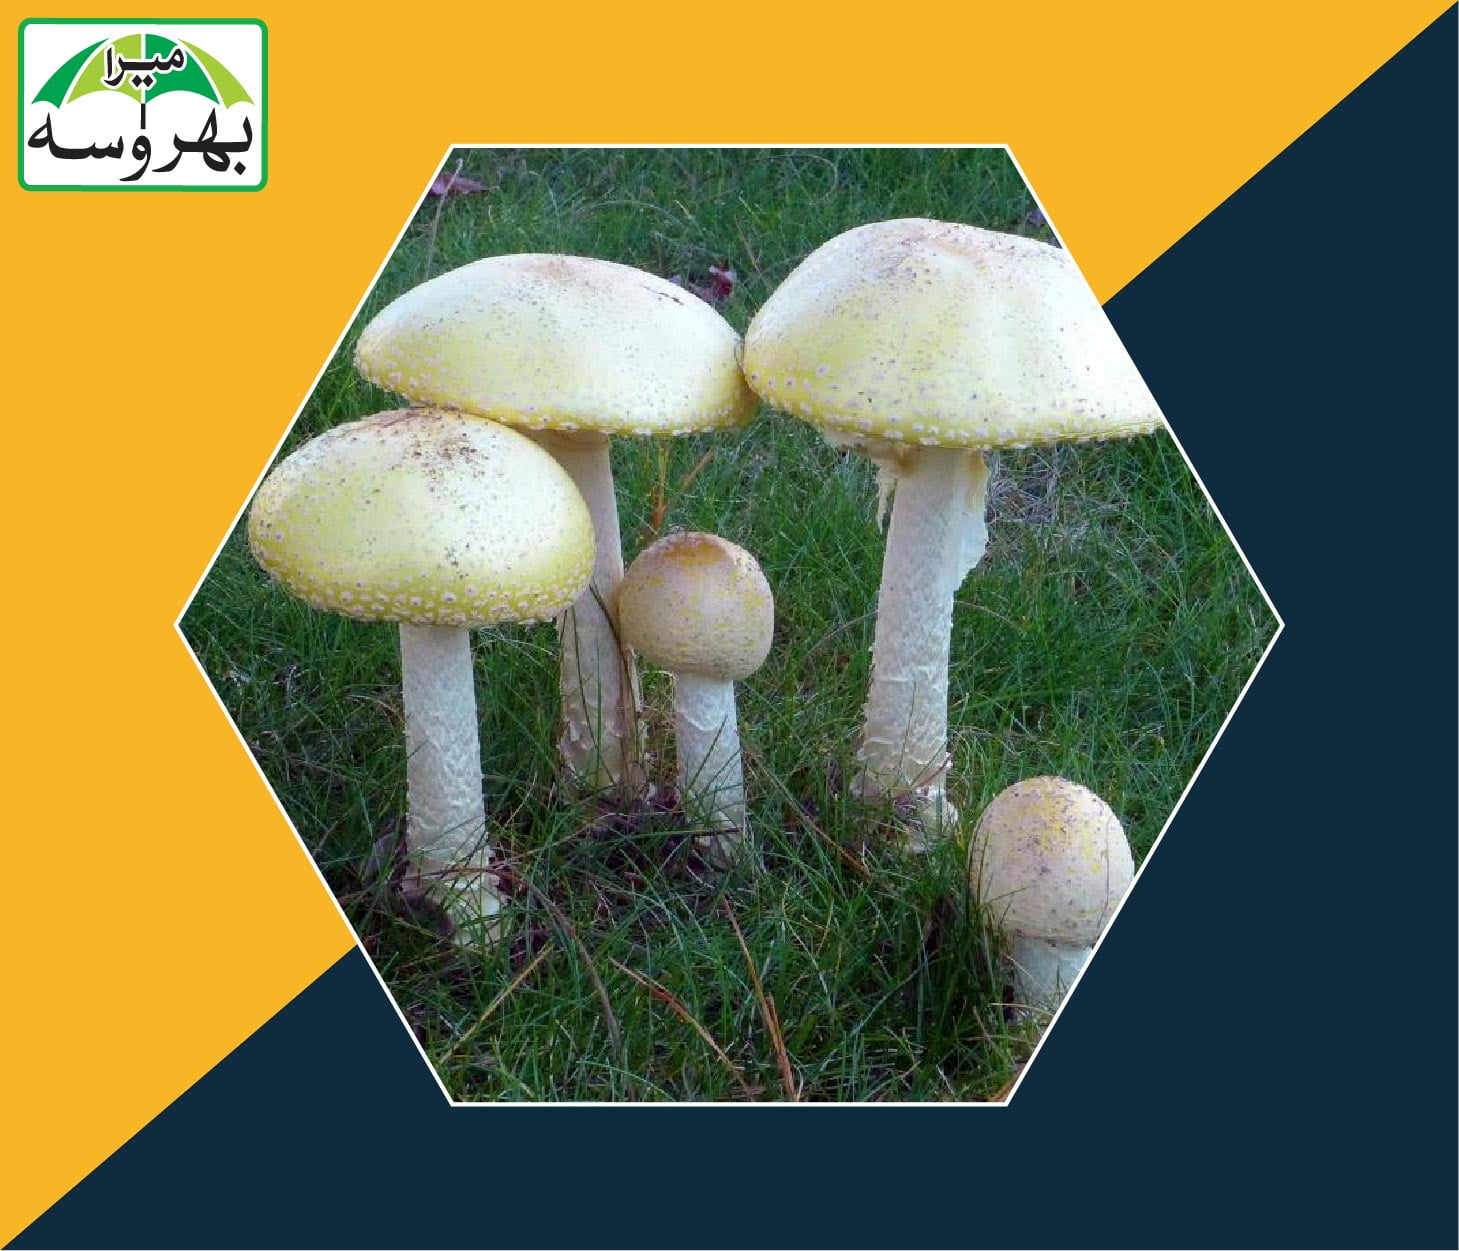 Characteristics of Fungi